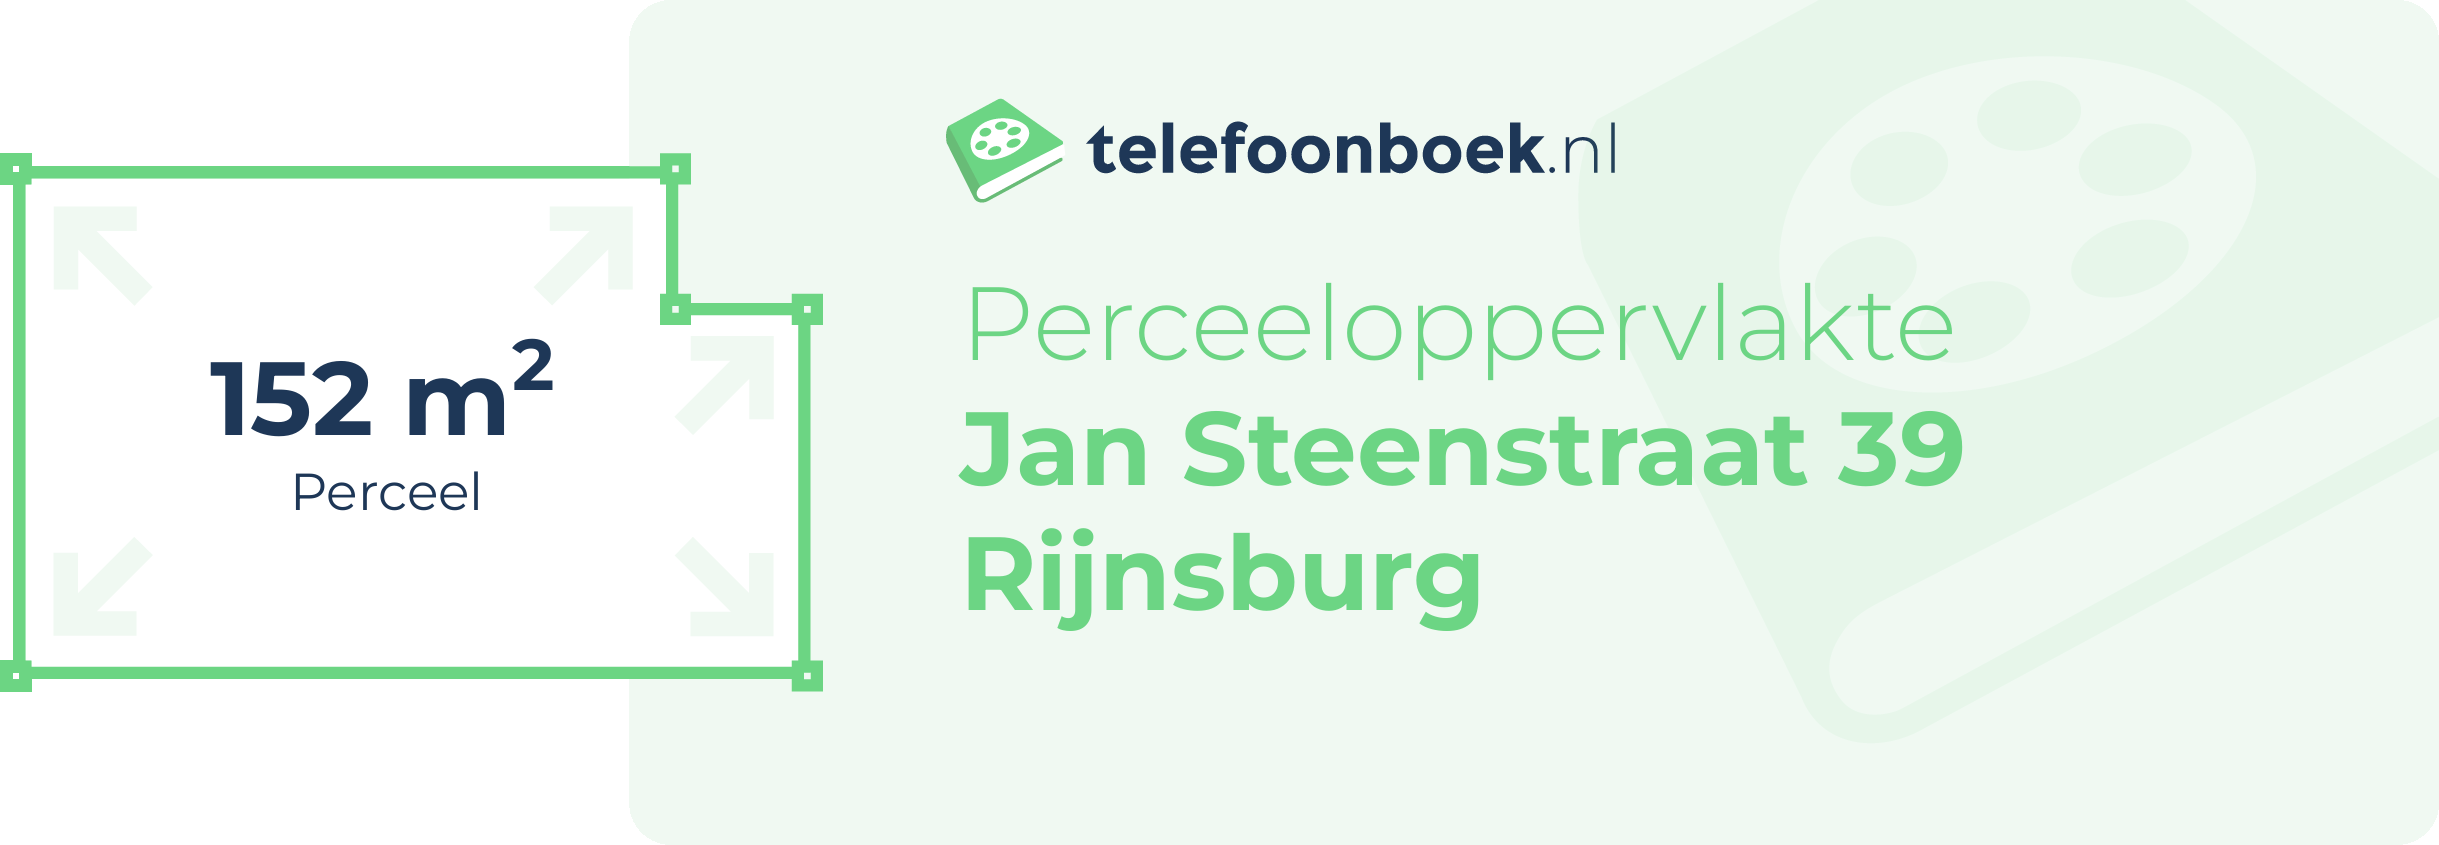 Perceeloppervlakte Jan Steenstraat 39 Rijnsburg